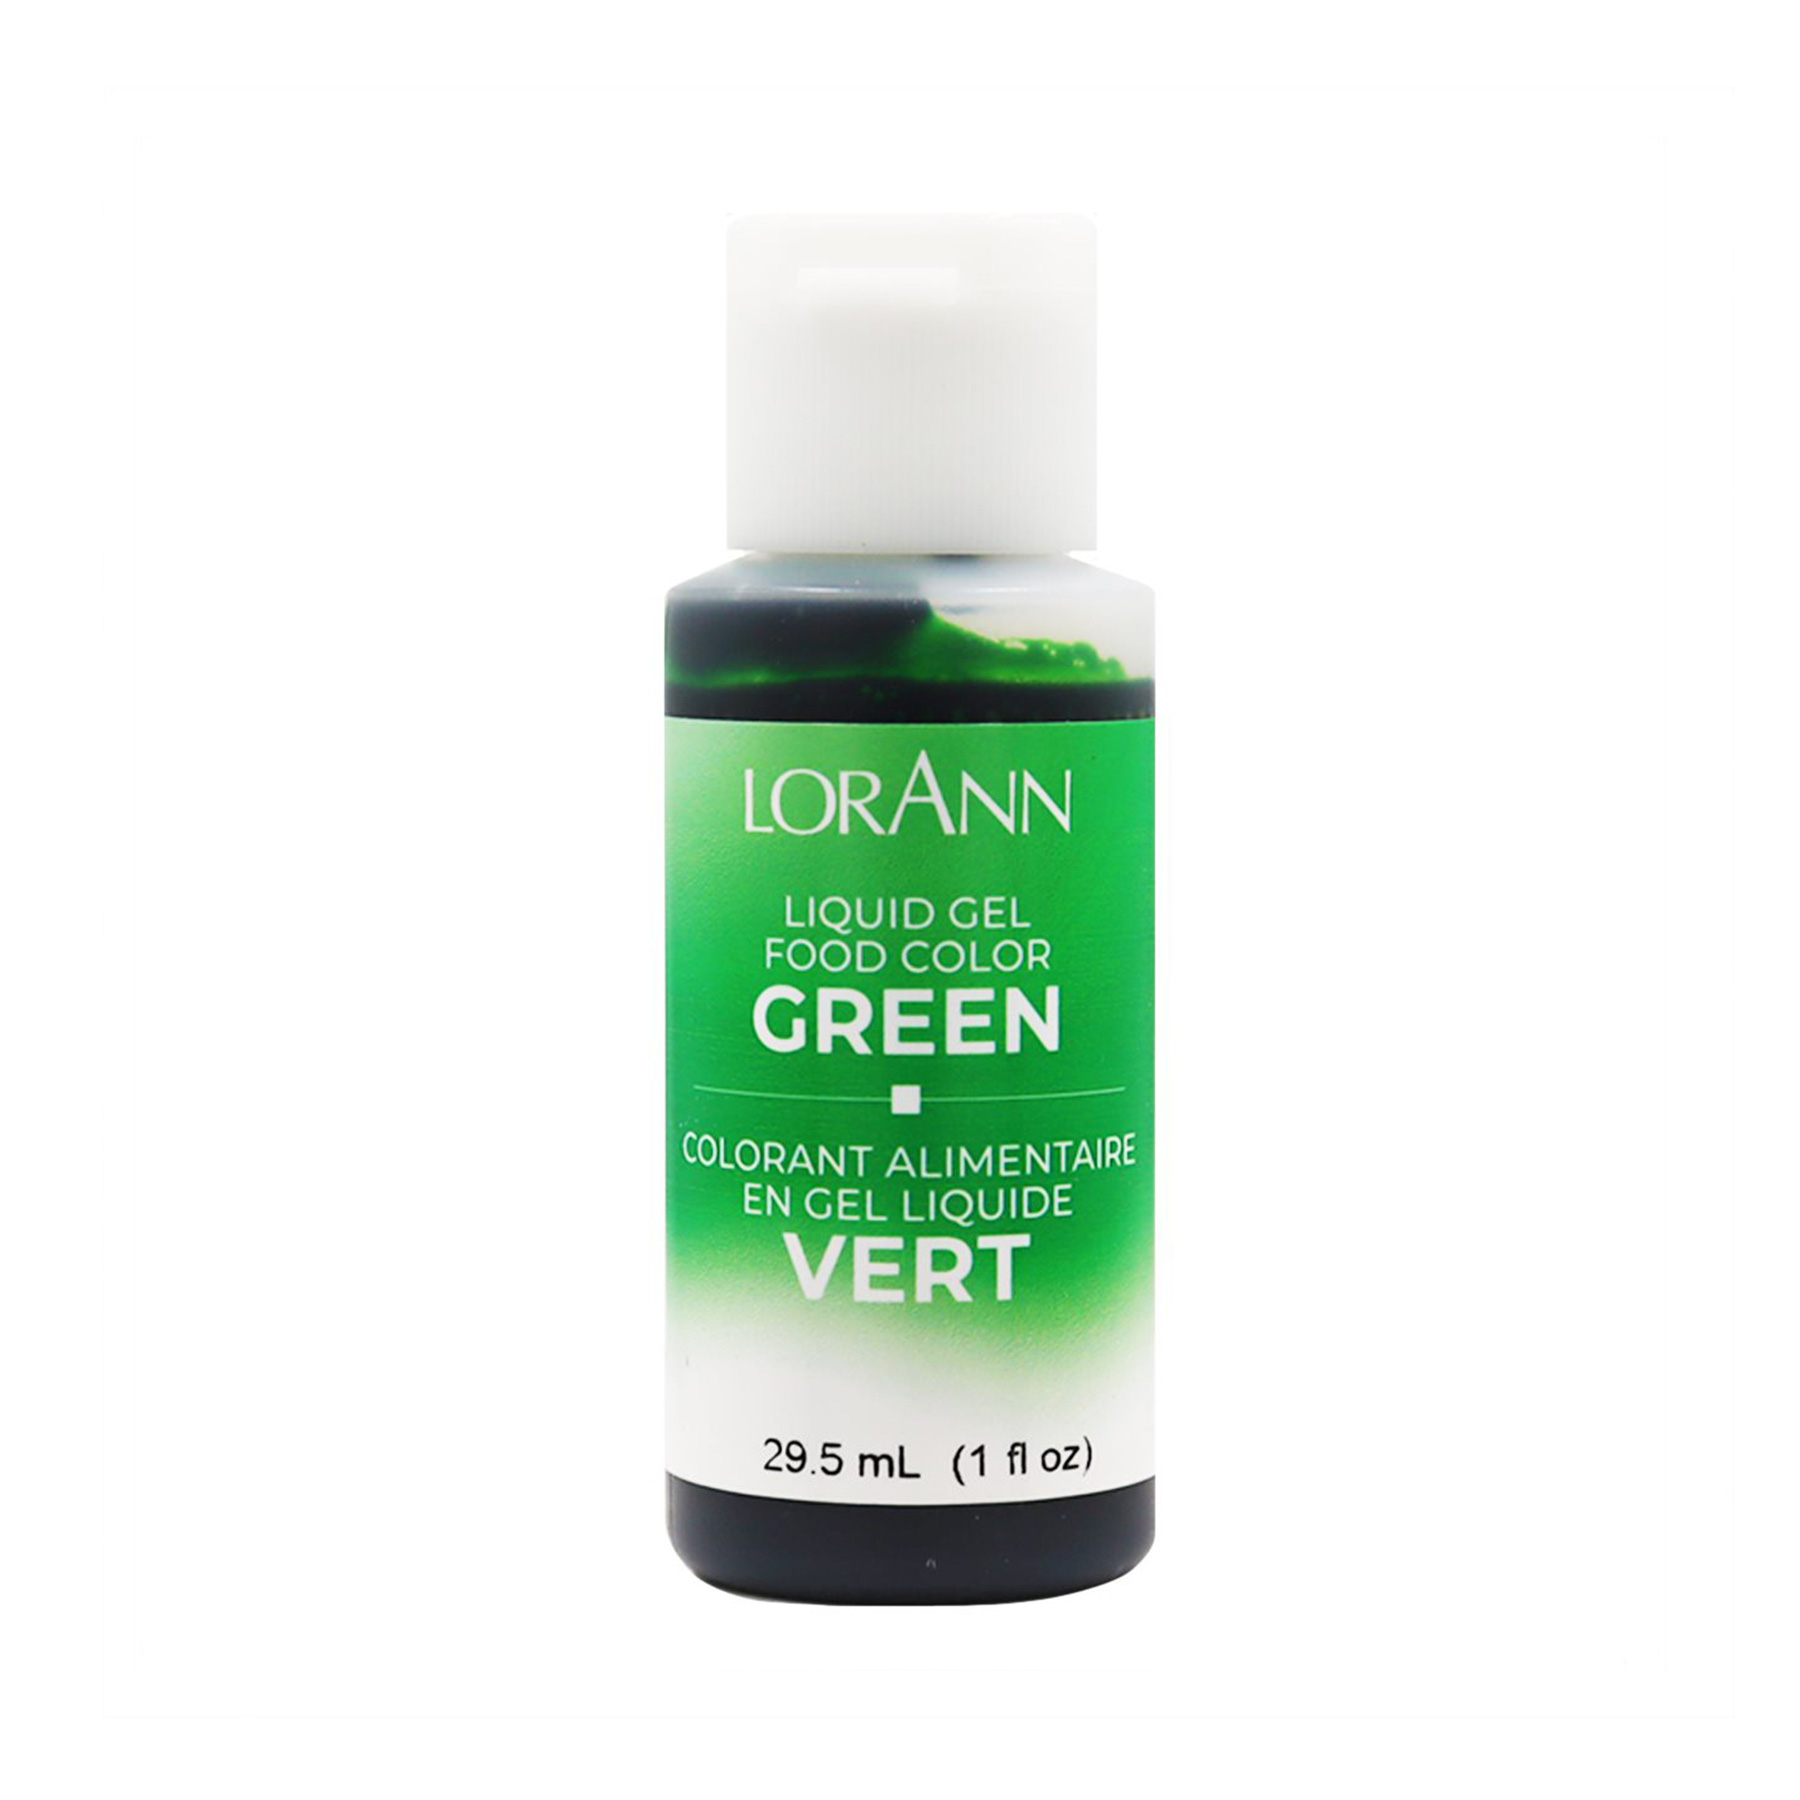 lorann-green-liquid-gel-food-colouring-29-5ml